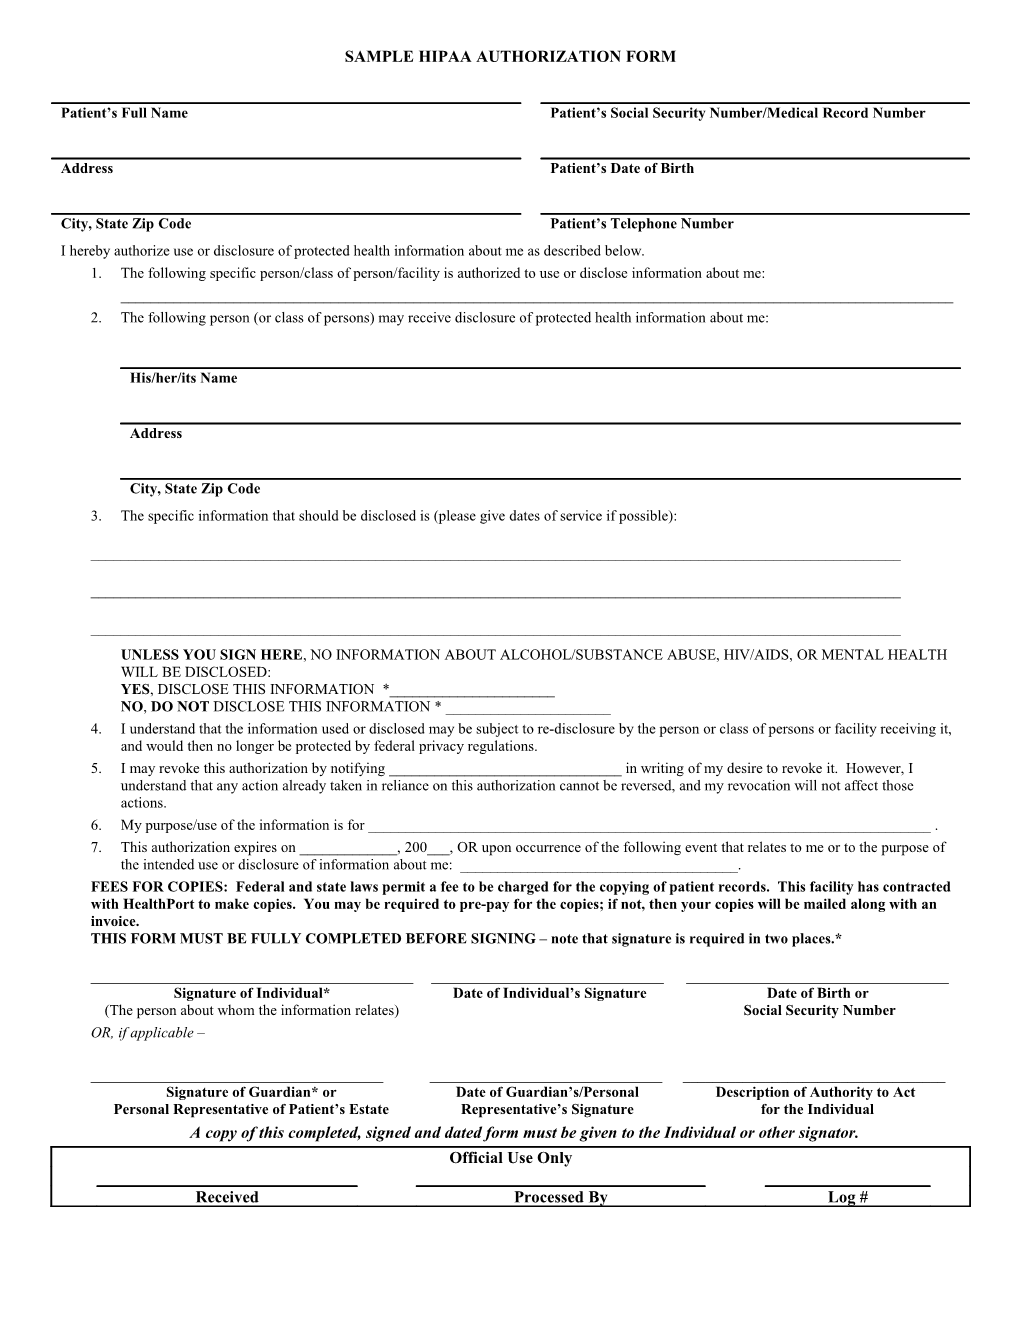 Sample HIPAA Authorization Form